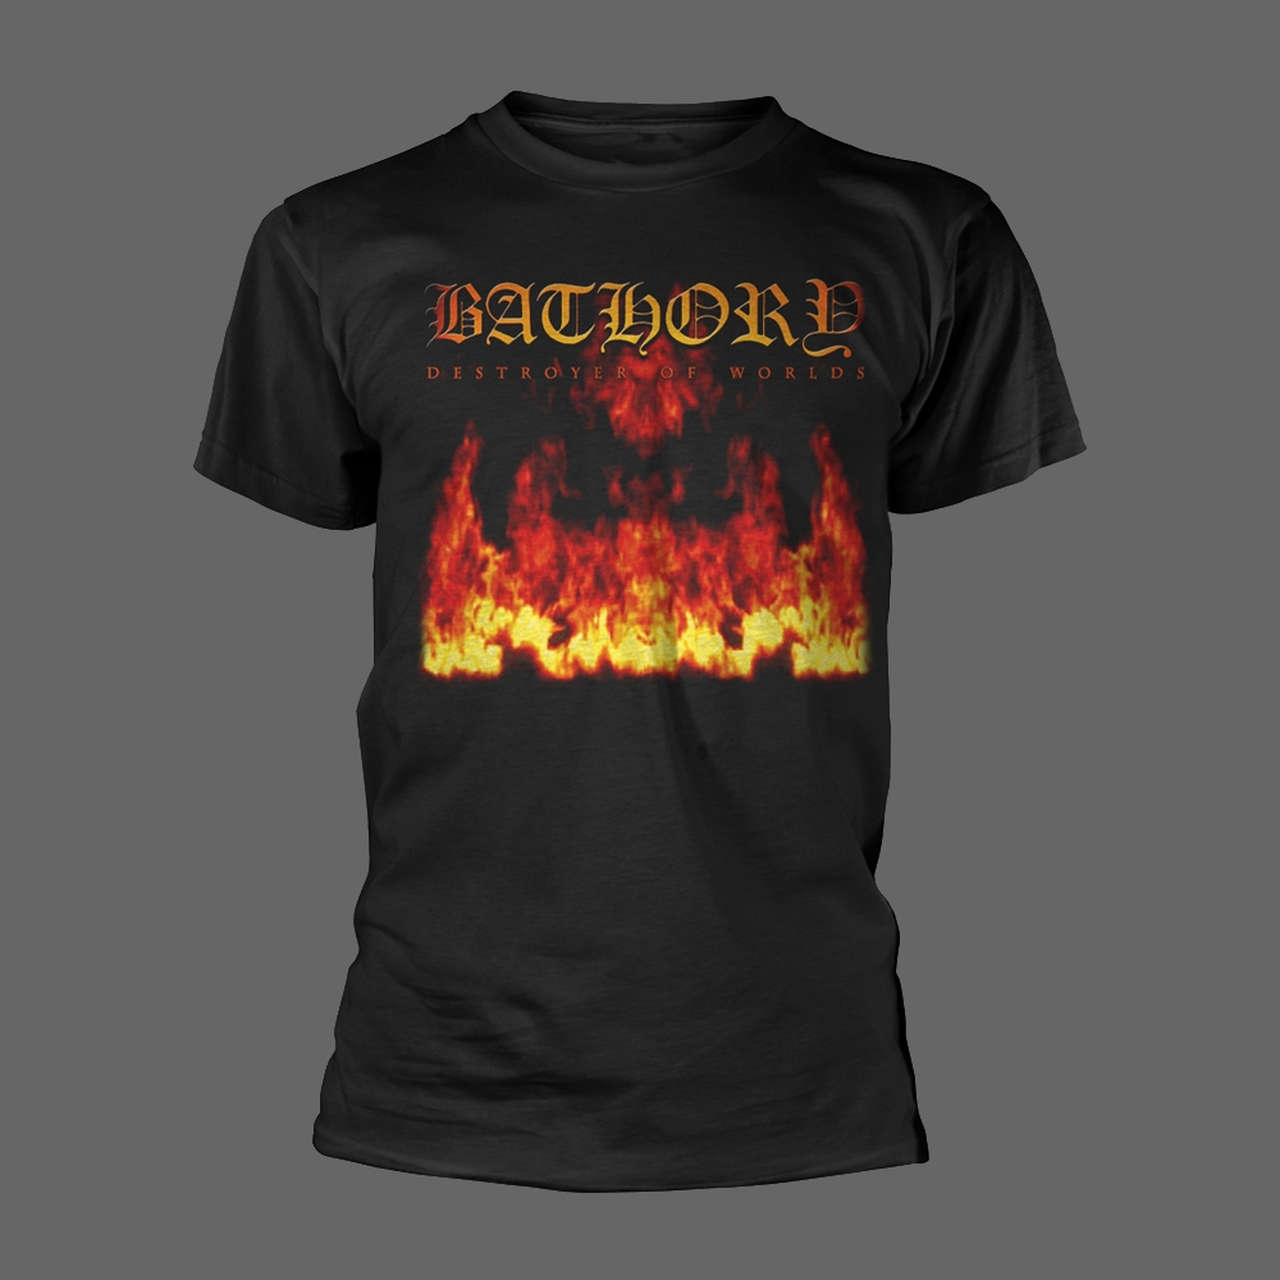 Bathory - Destroyer of Worlds (T-Shirt)